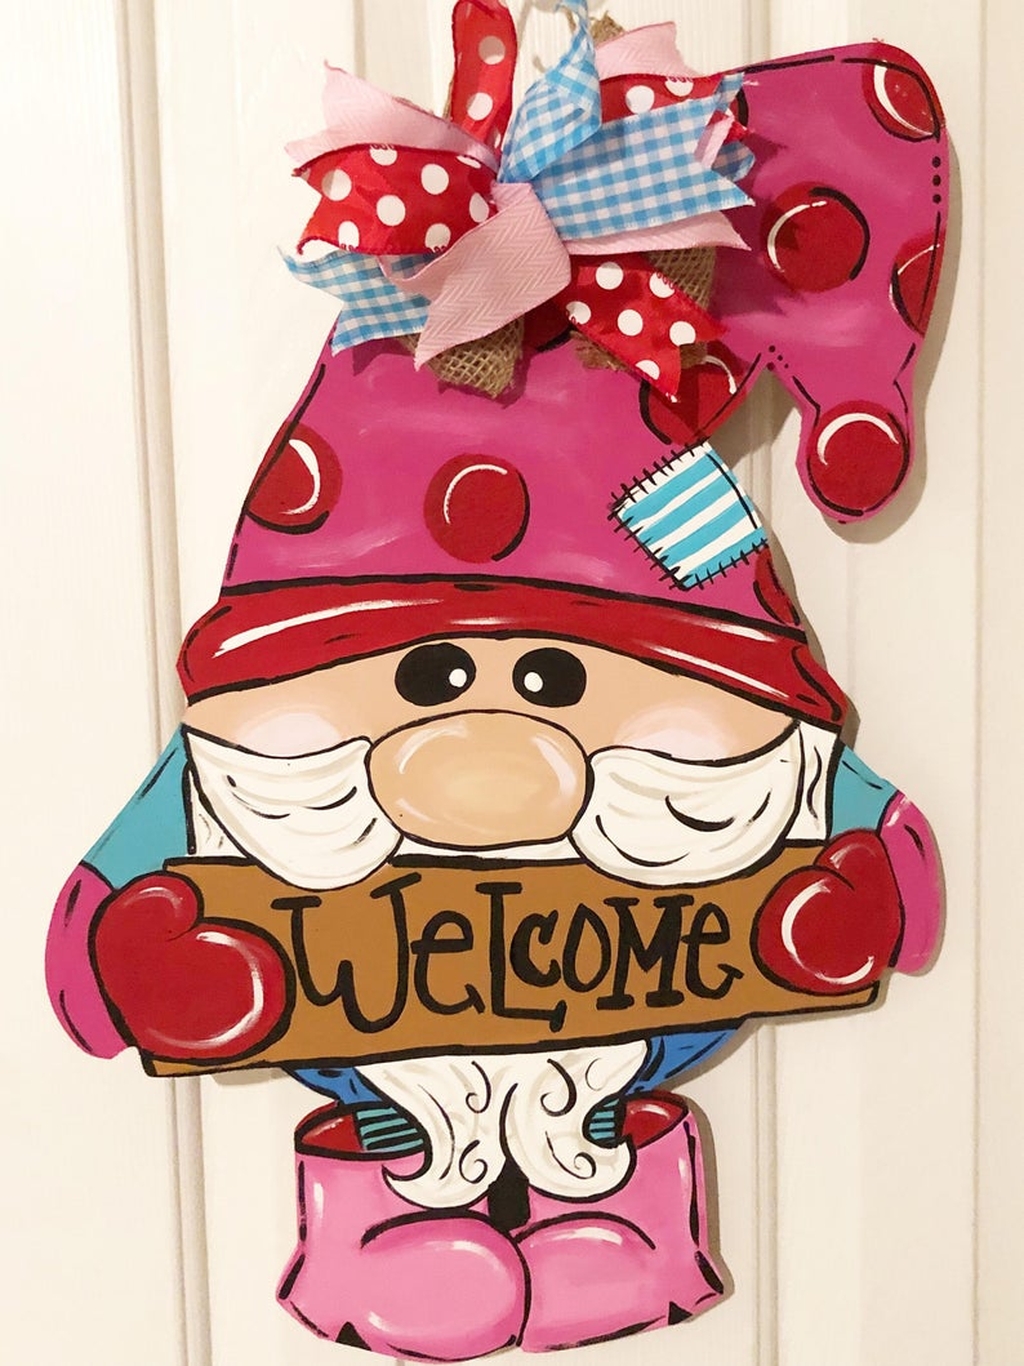 Cute Valentine Door Decorations Ideas To Spread The Seasons Greetings 31